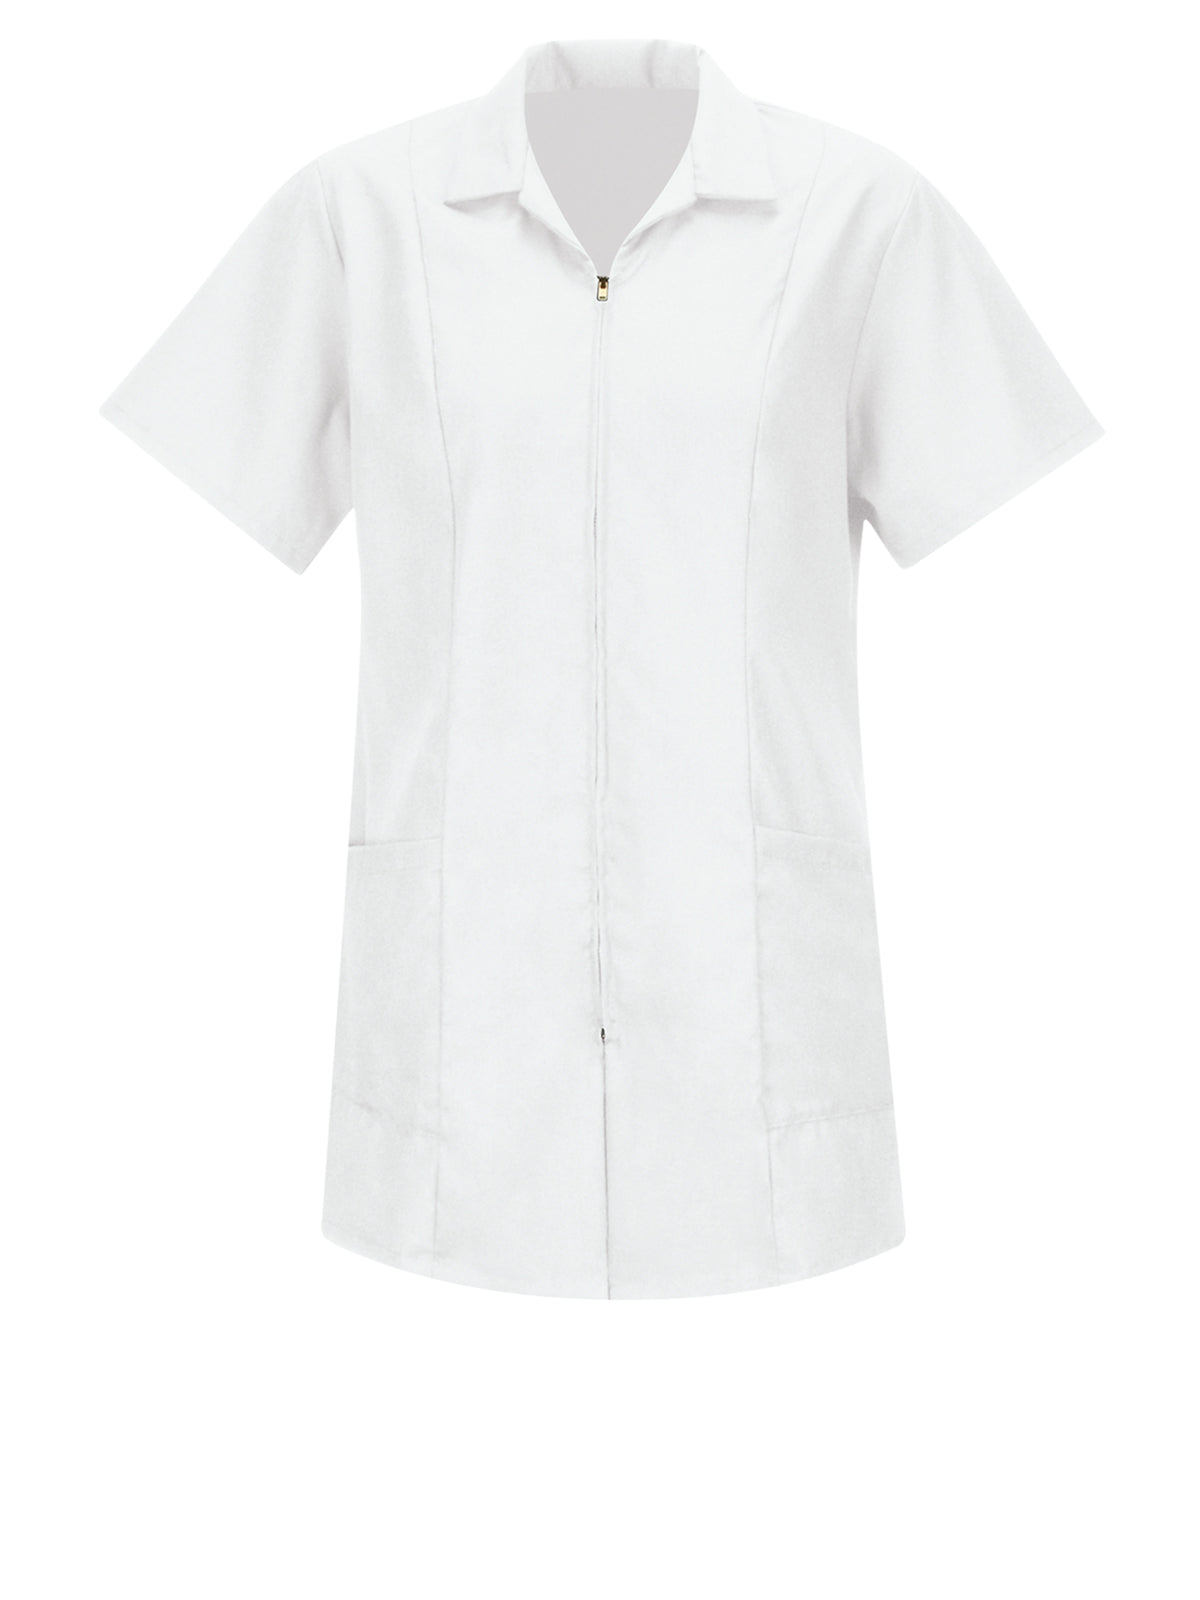 Women's Zip-Front Shirt - KP43 - White